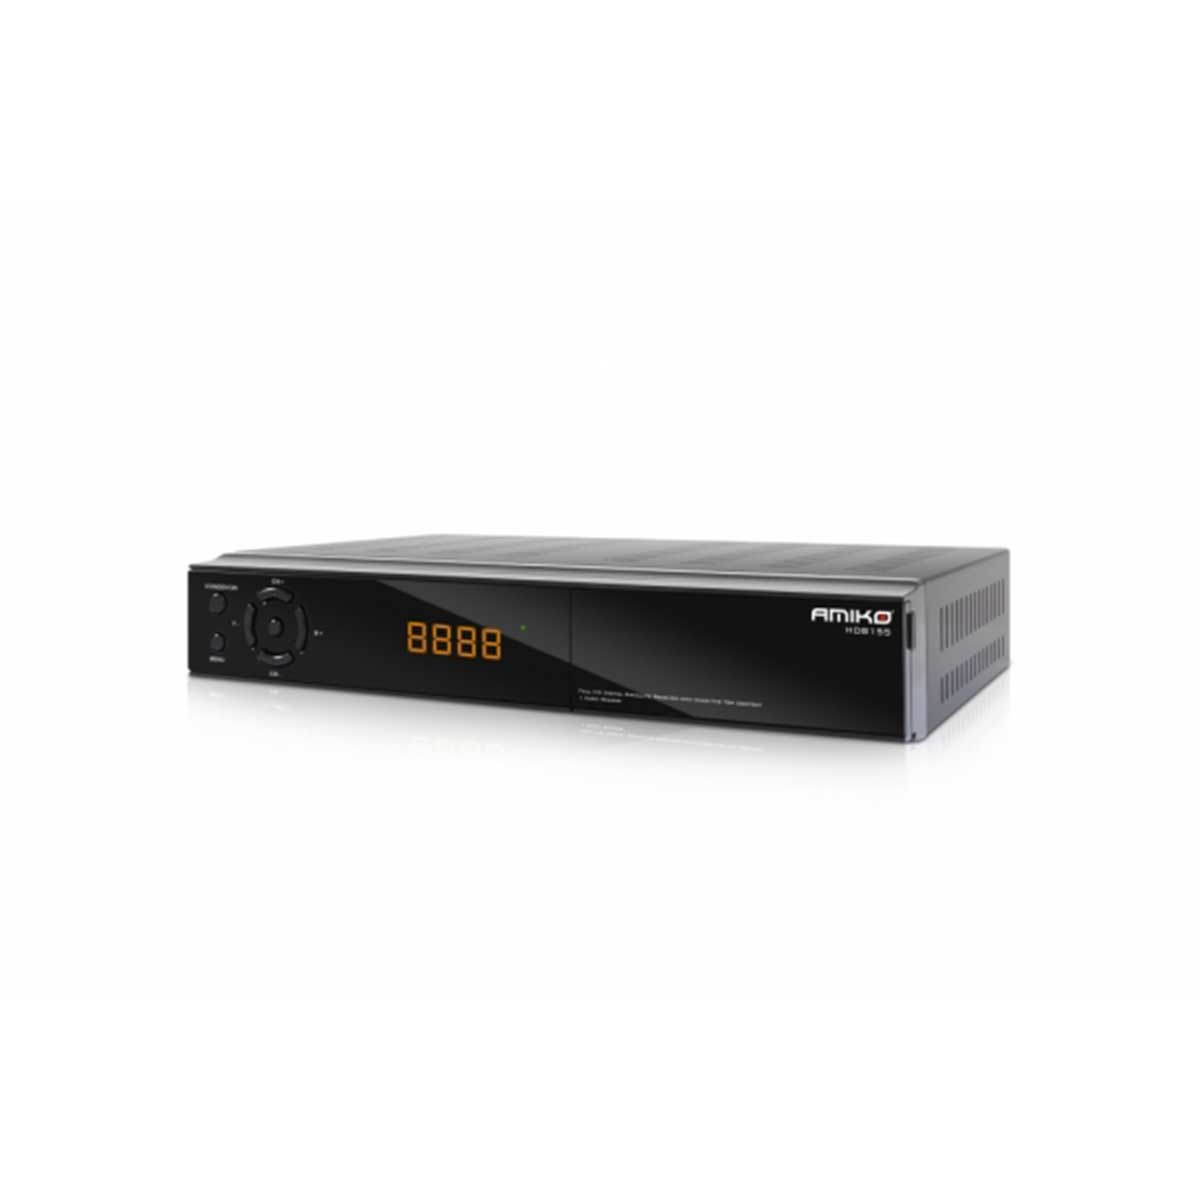 DVB-S2, AMIKO schwarz) Sat-Receiver HD PVR-Funktion=optional, 8155 HD (HDTV,